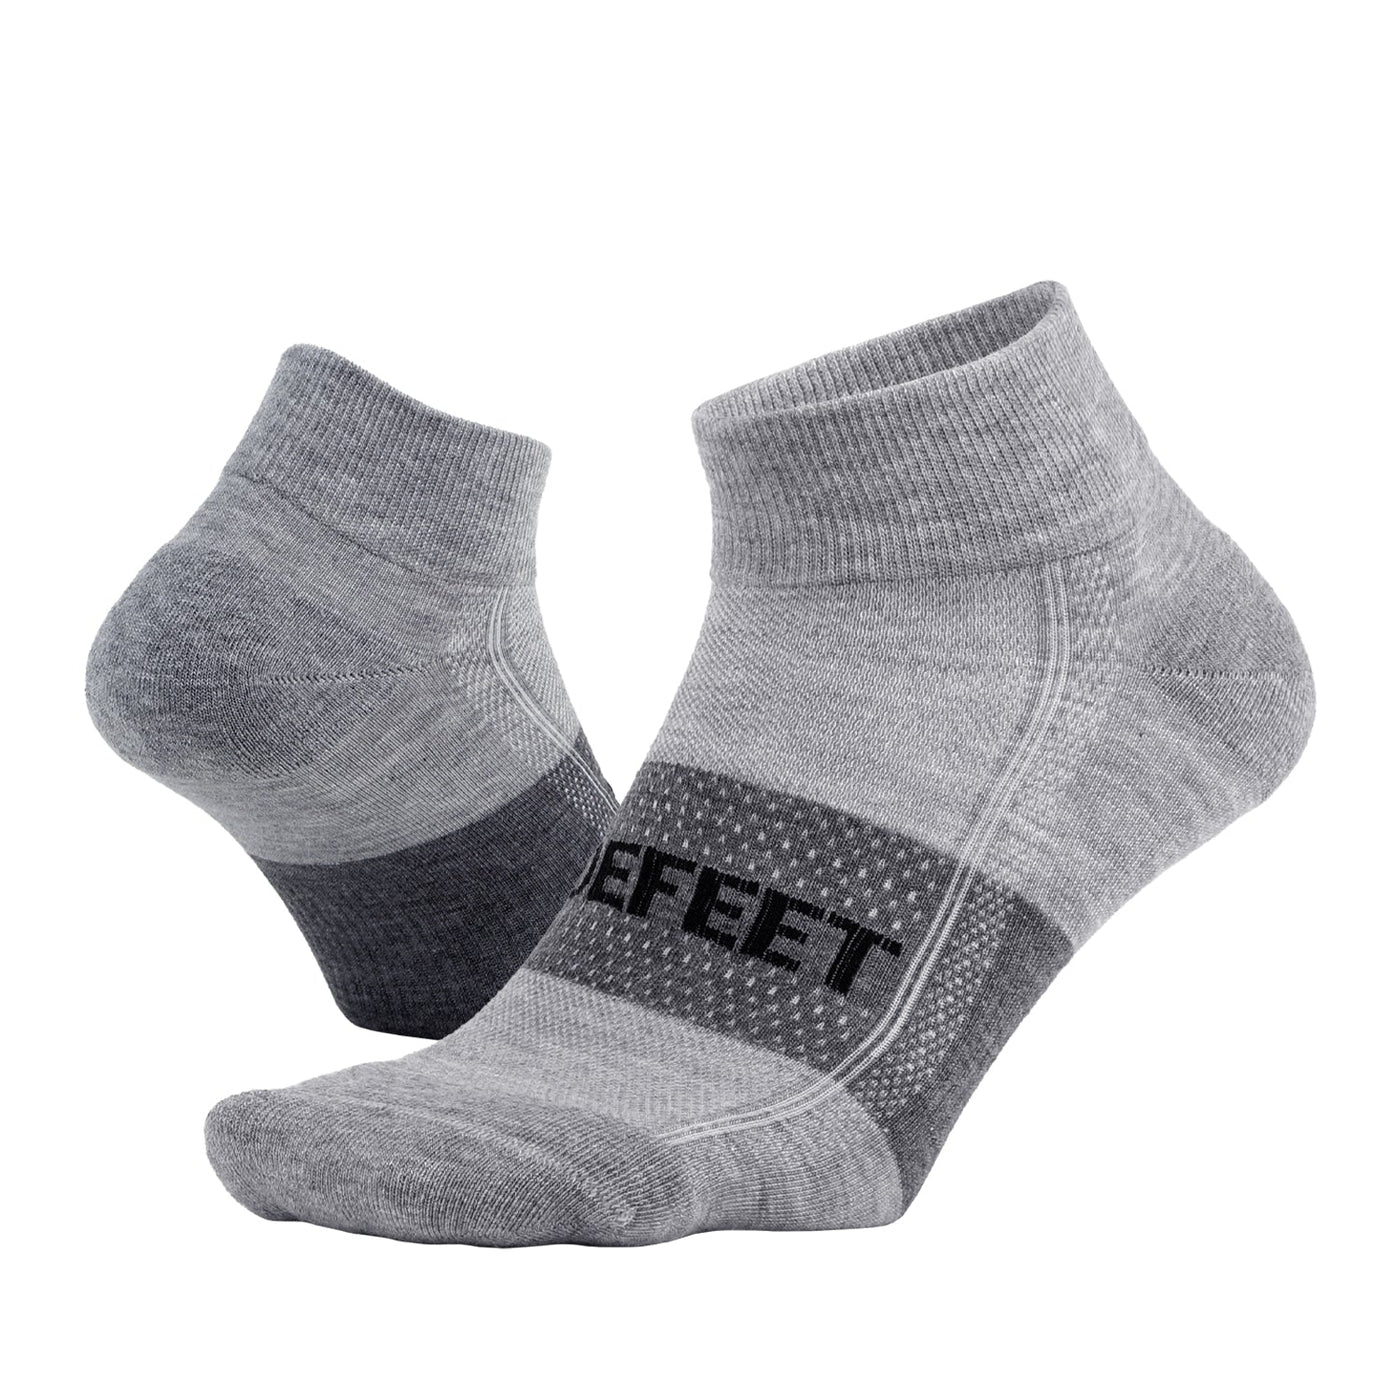 Speede Pro 1" Sport Socks Bundle: 3 Pairs - DeFeet